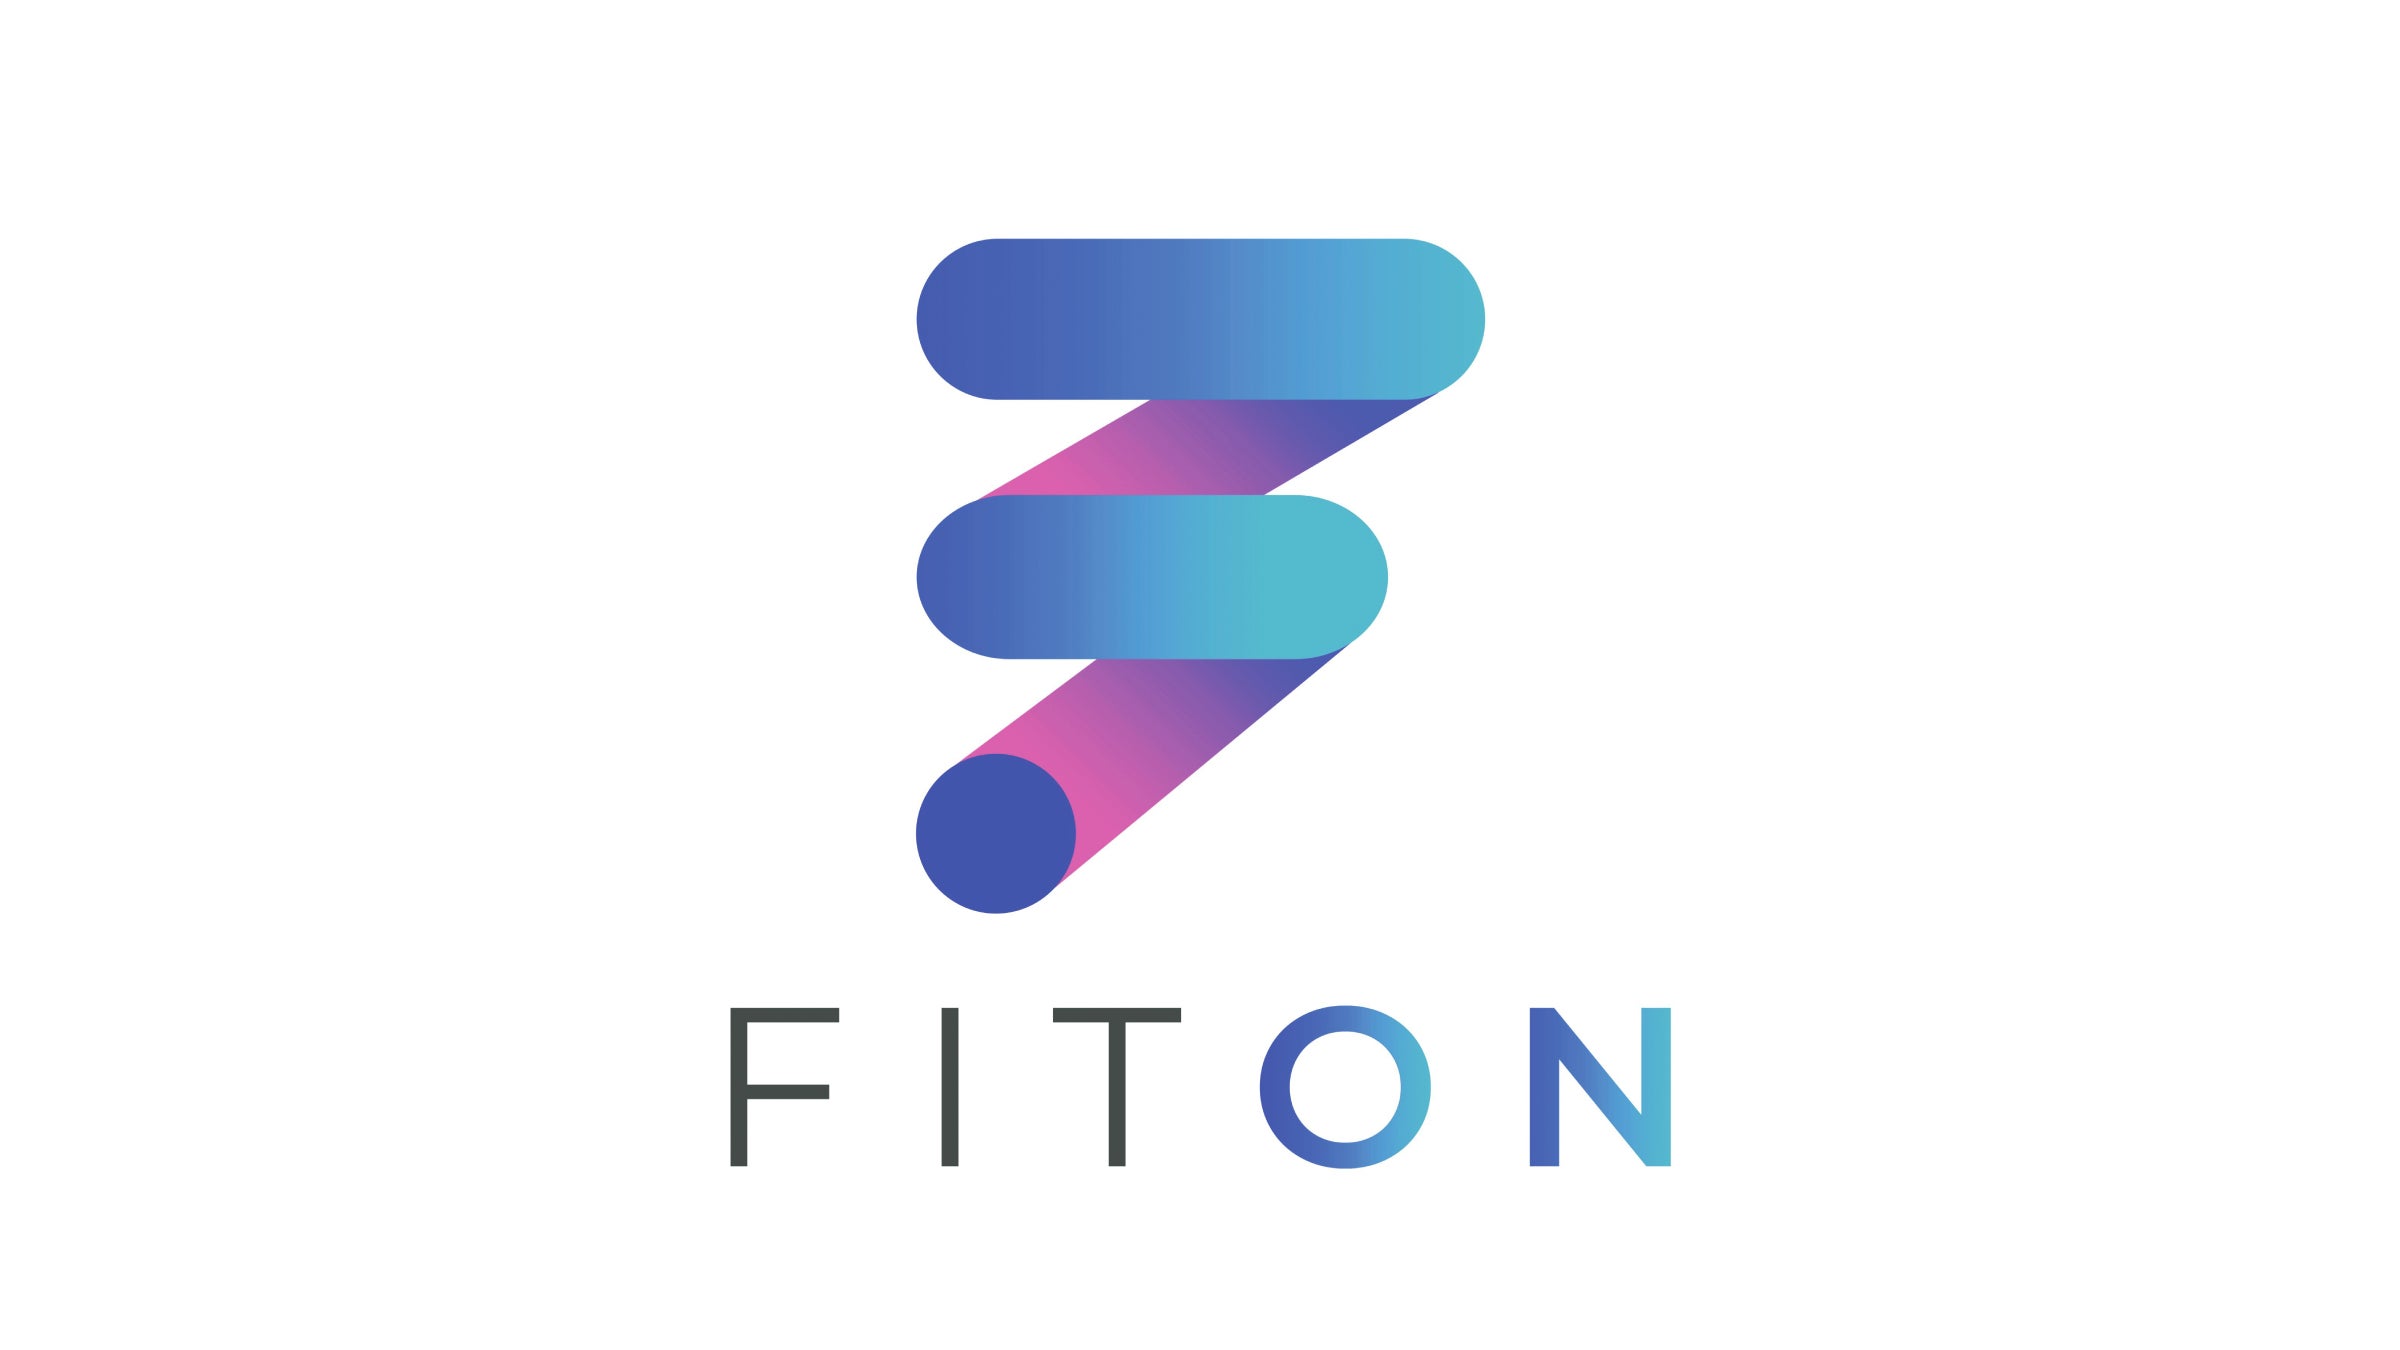 FitOn app tile